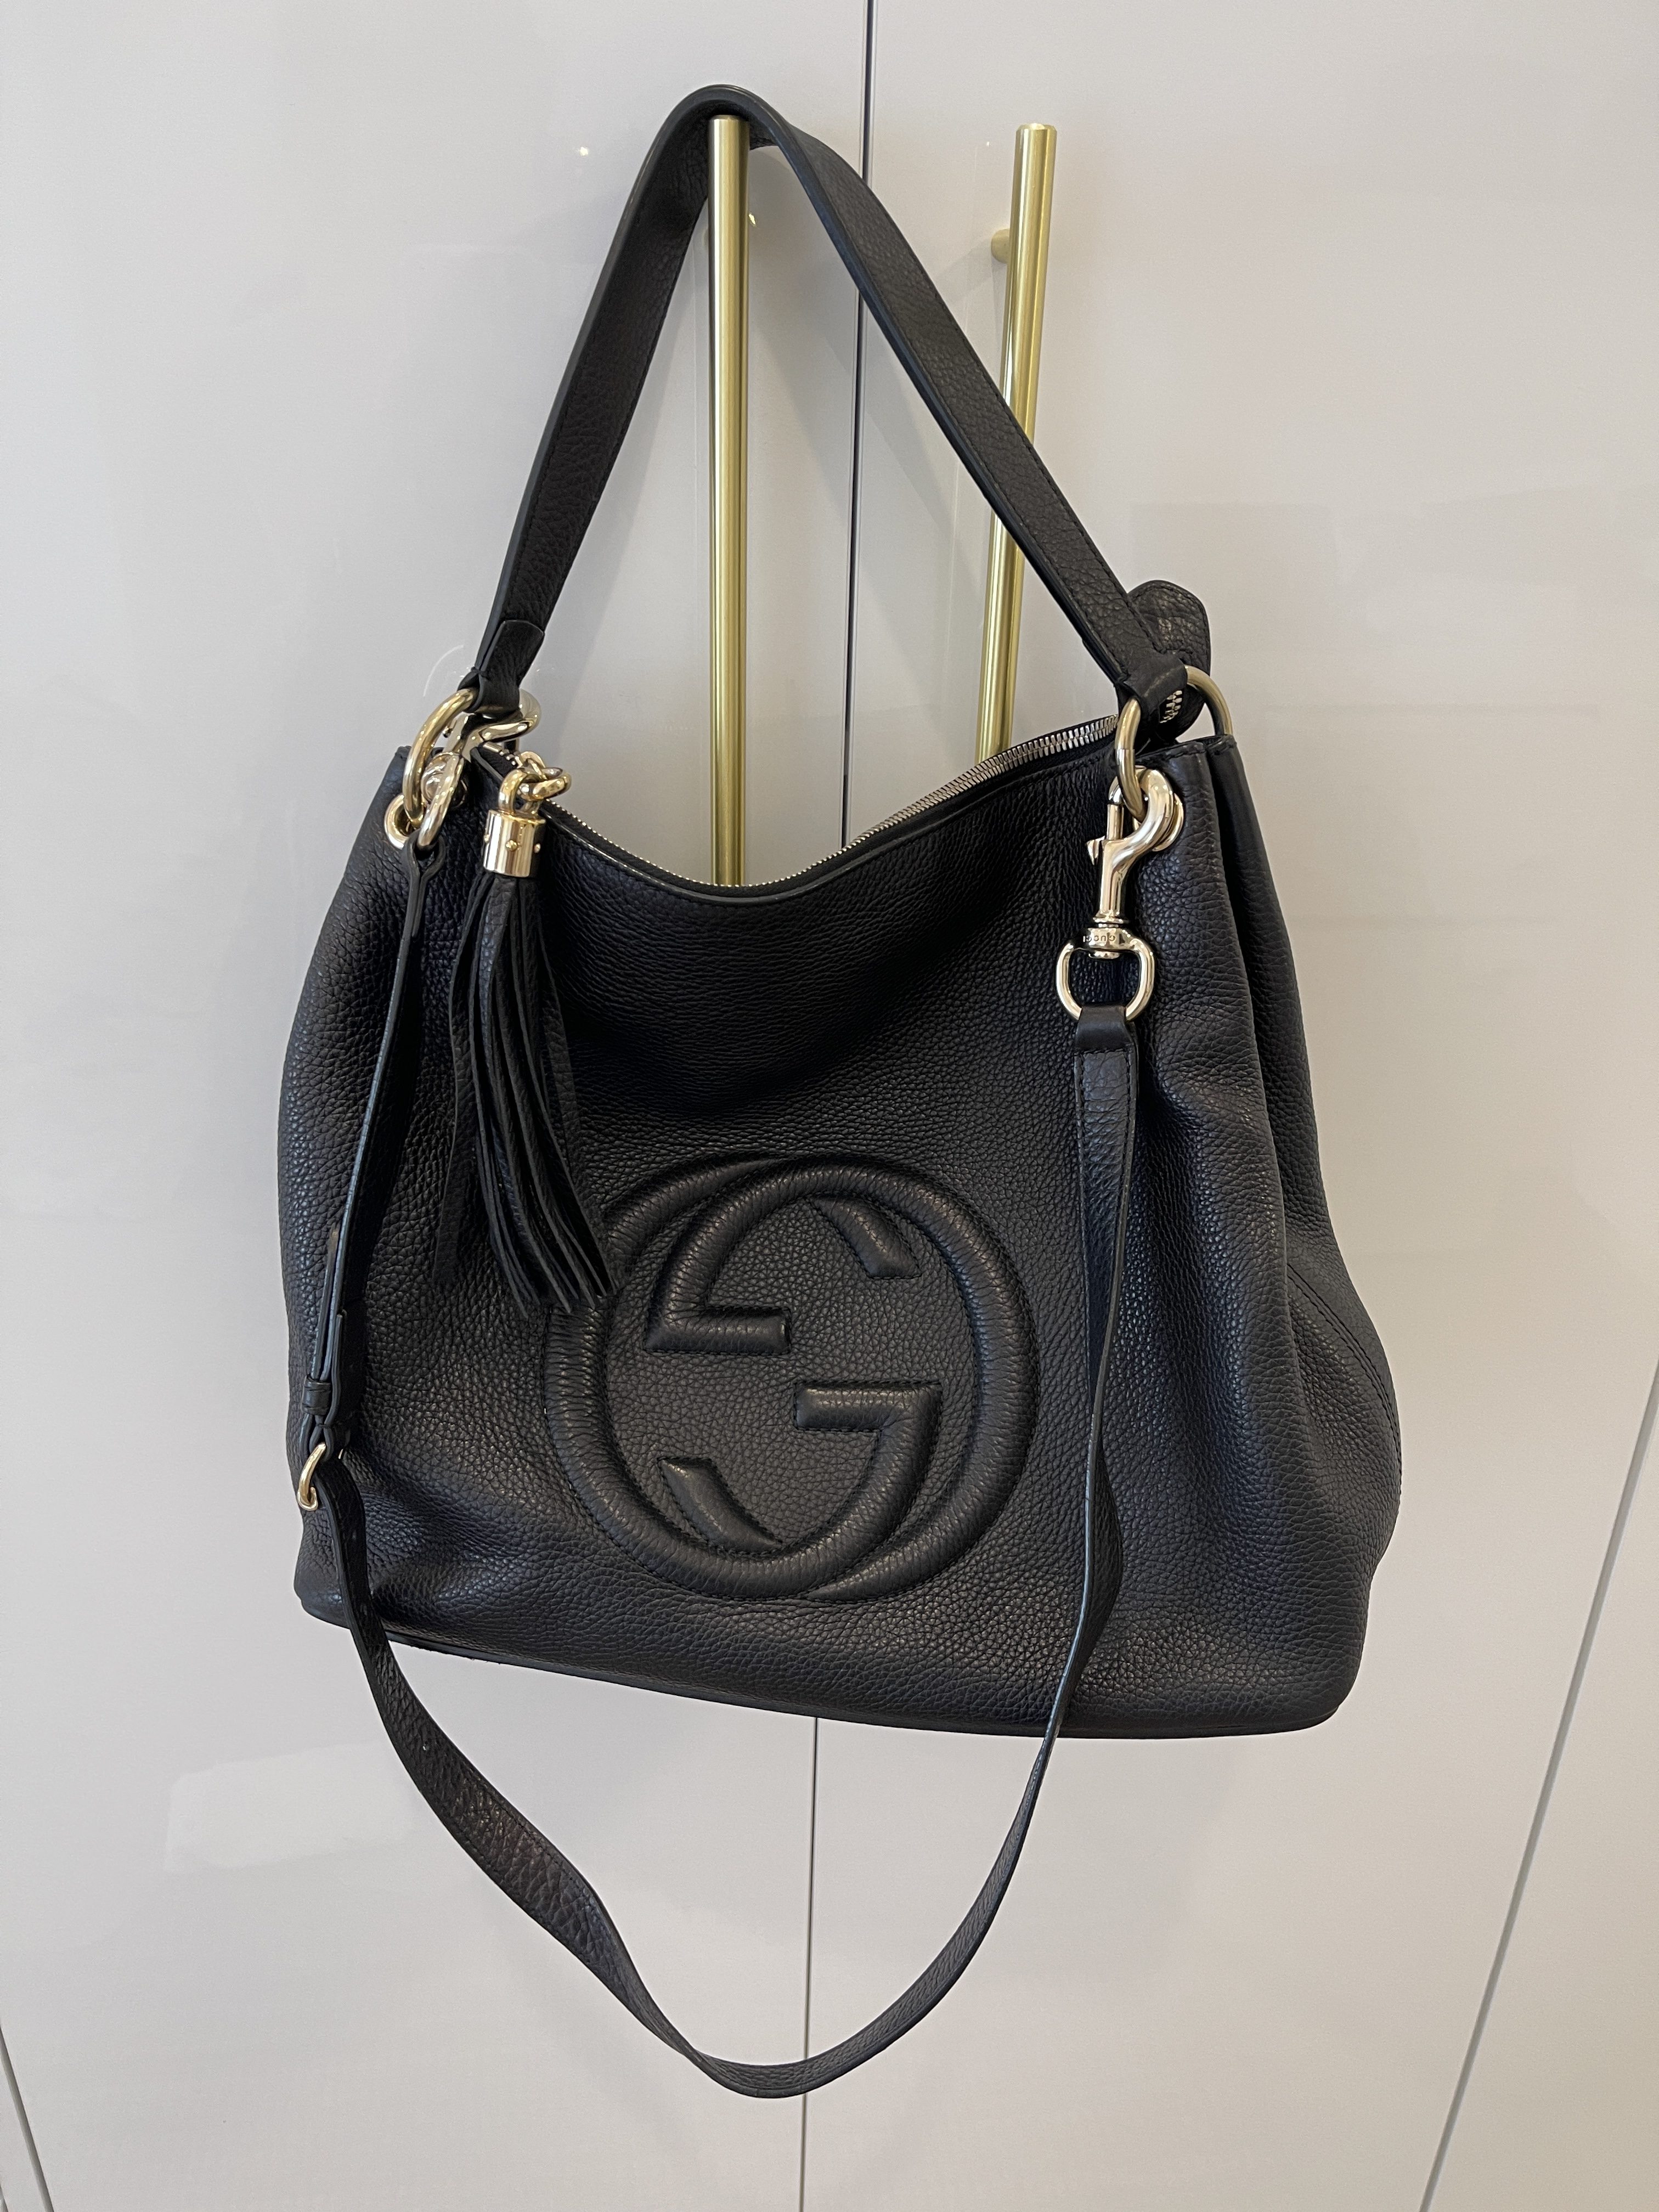 Gucci - Soho Large Leather Hobo Black  Black bag outfit, Gucci soho bag,  Gucci